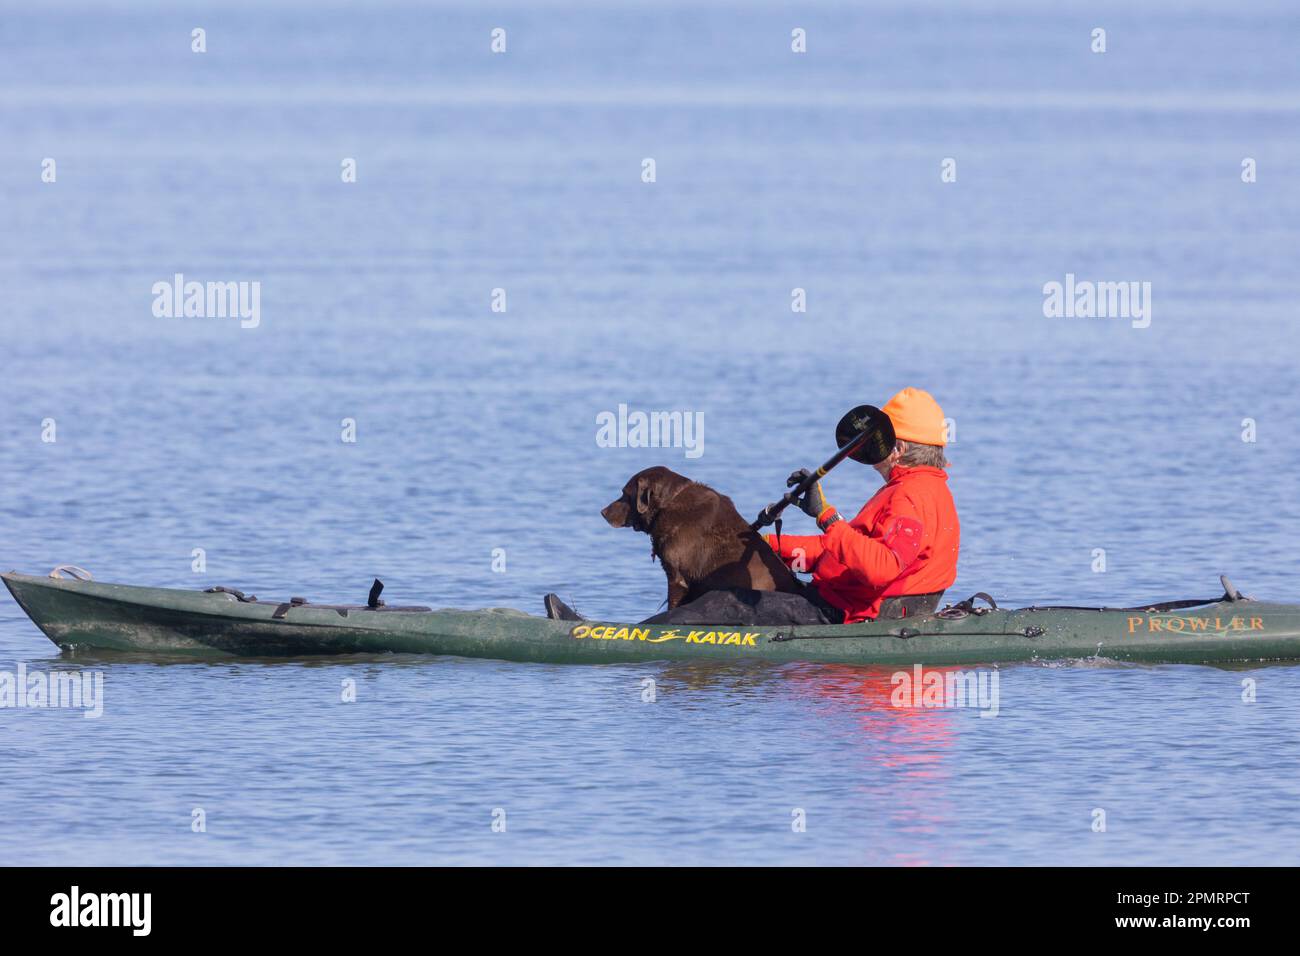 Mann in roter Jacke mit Hund im Ocean Kajak Stockfoto